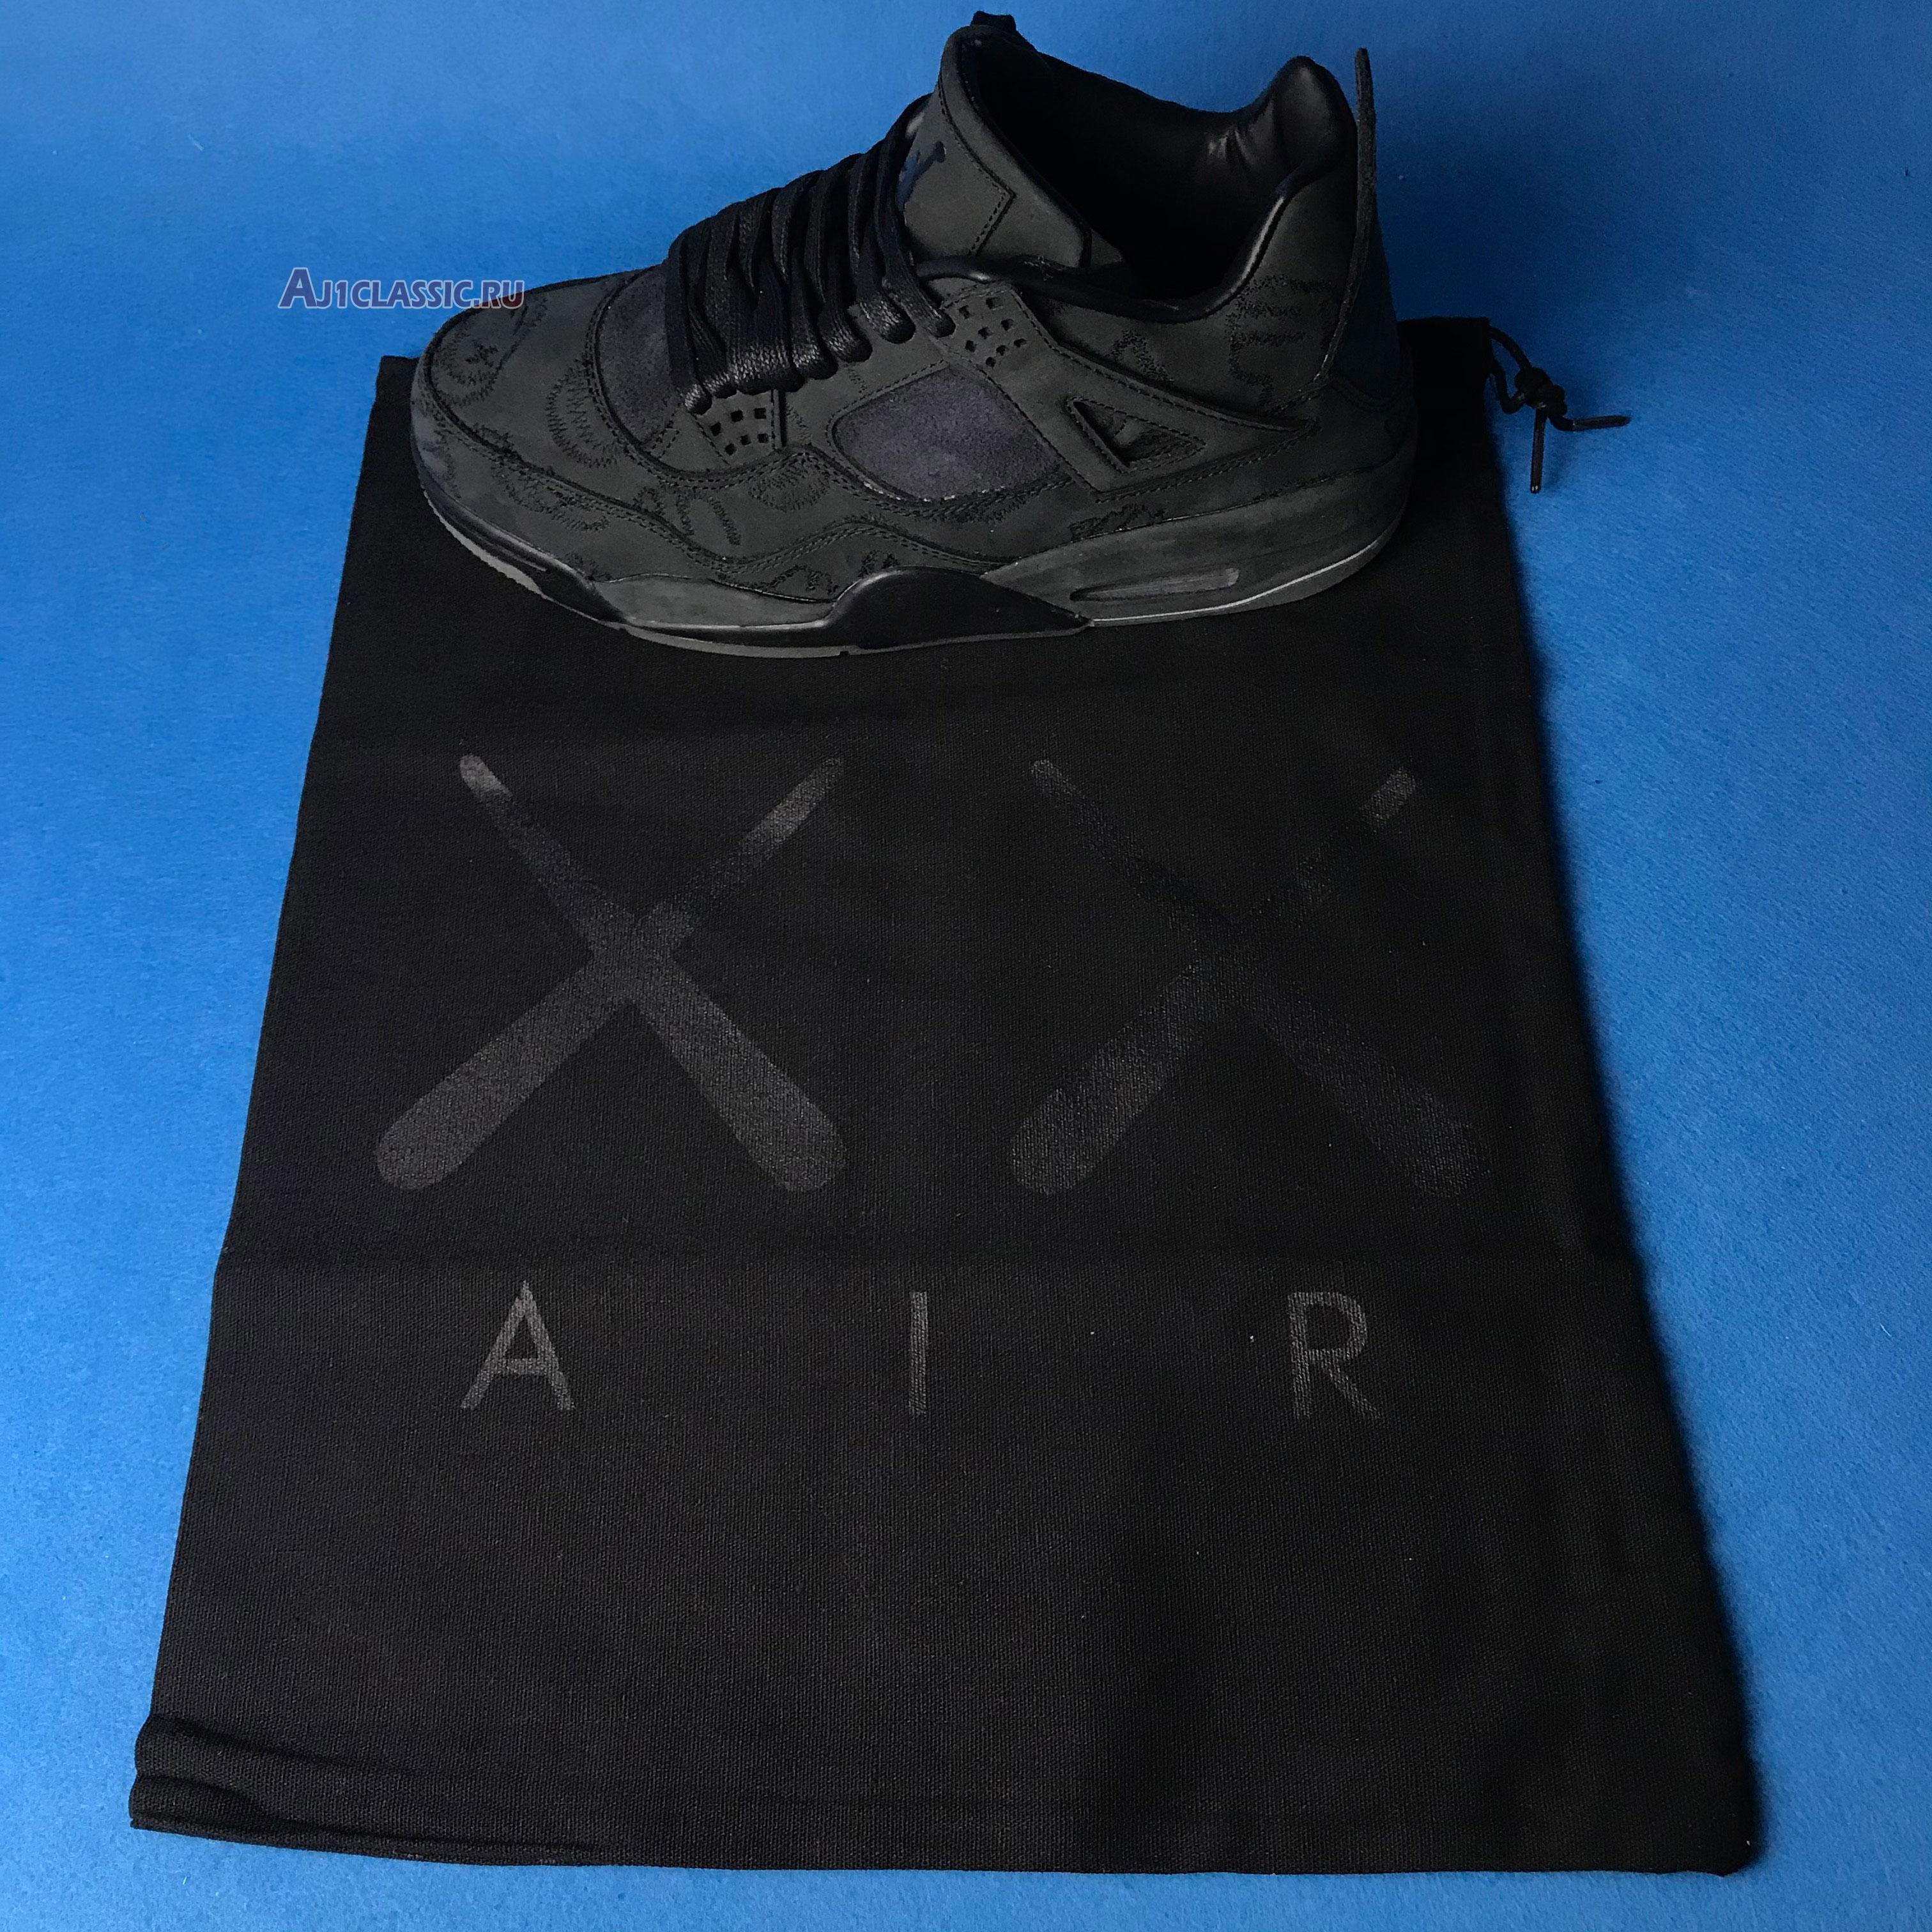 KAWS x Air Jordan 4 Retro Black 930155-001 Black/Black-Clear Glow Sneakers